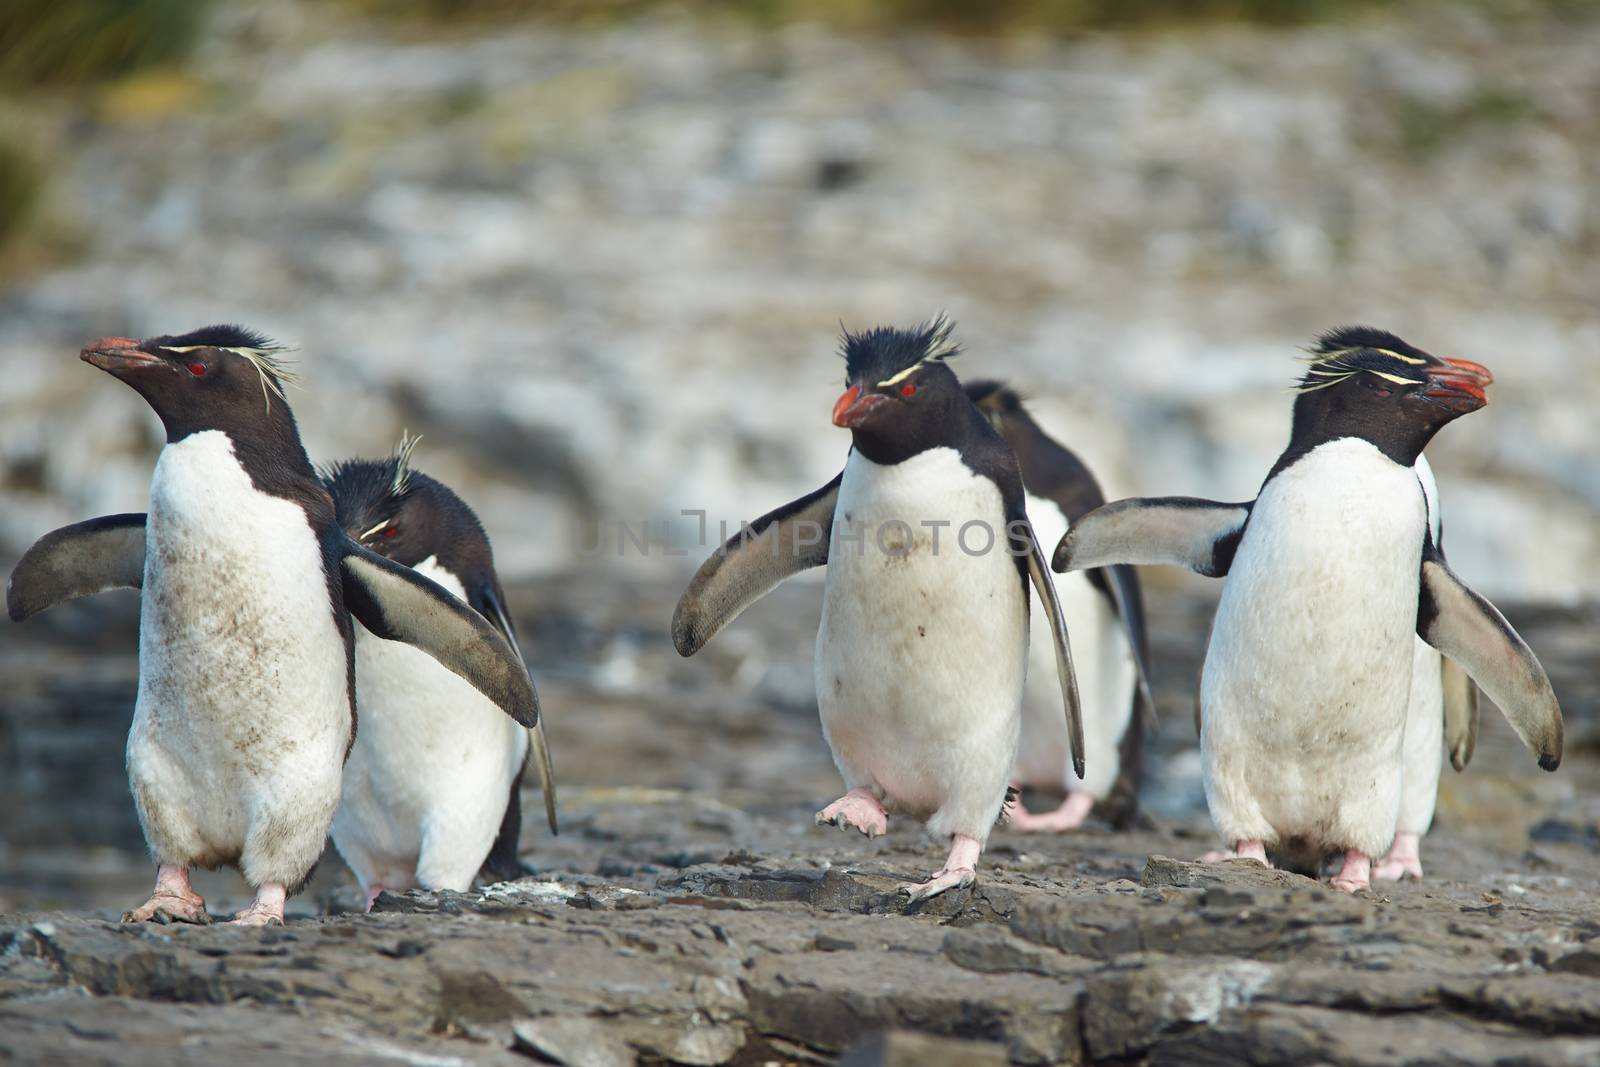 Rockhopper Penguins by JeremyRichards